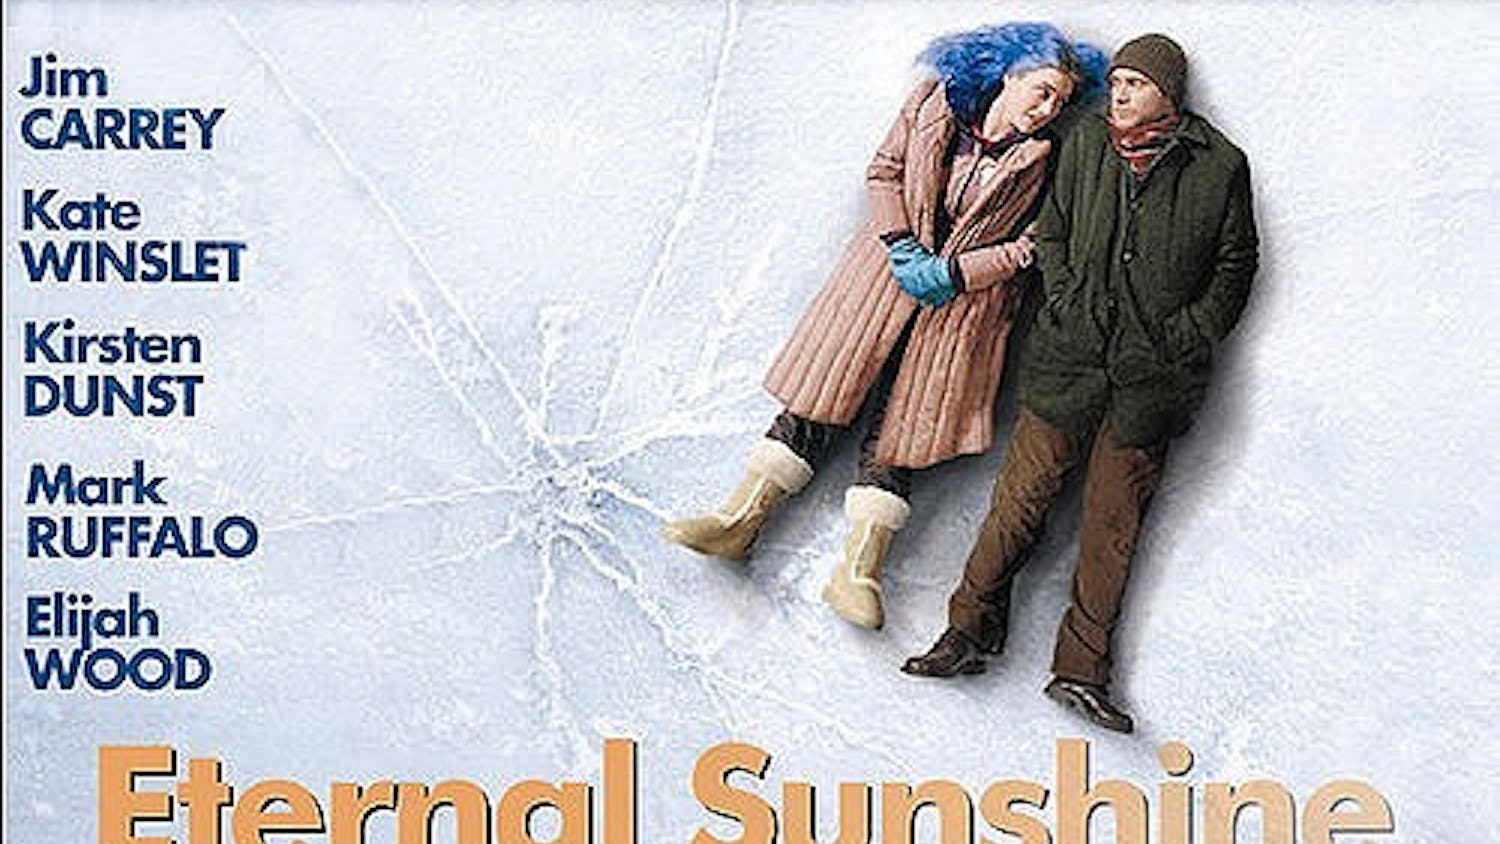 "Eternal Sunshine of the Spotless Mind" won an Academy Award in 2004 for Best Original Screenplay.